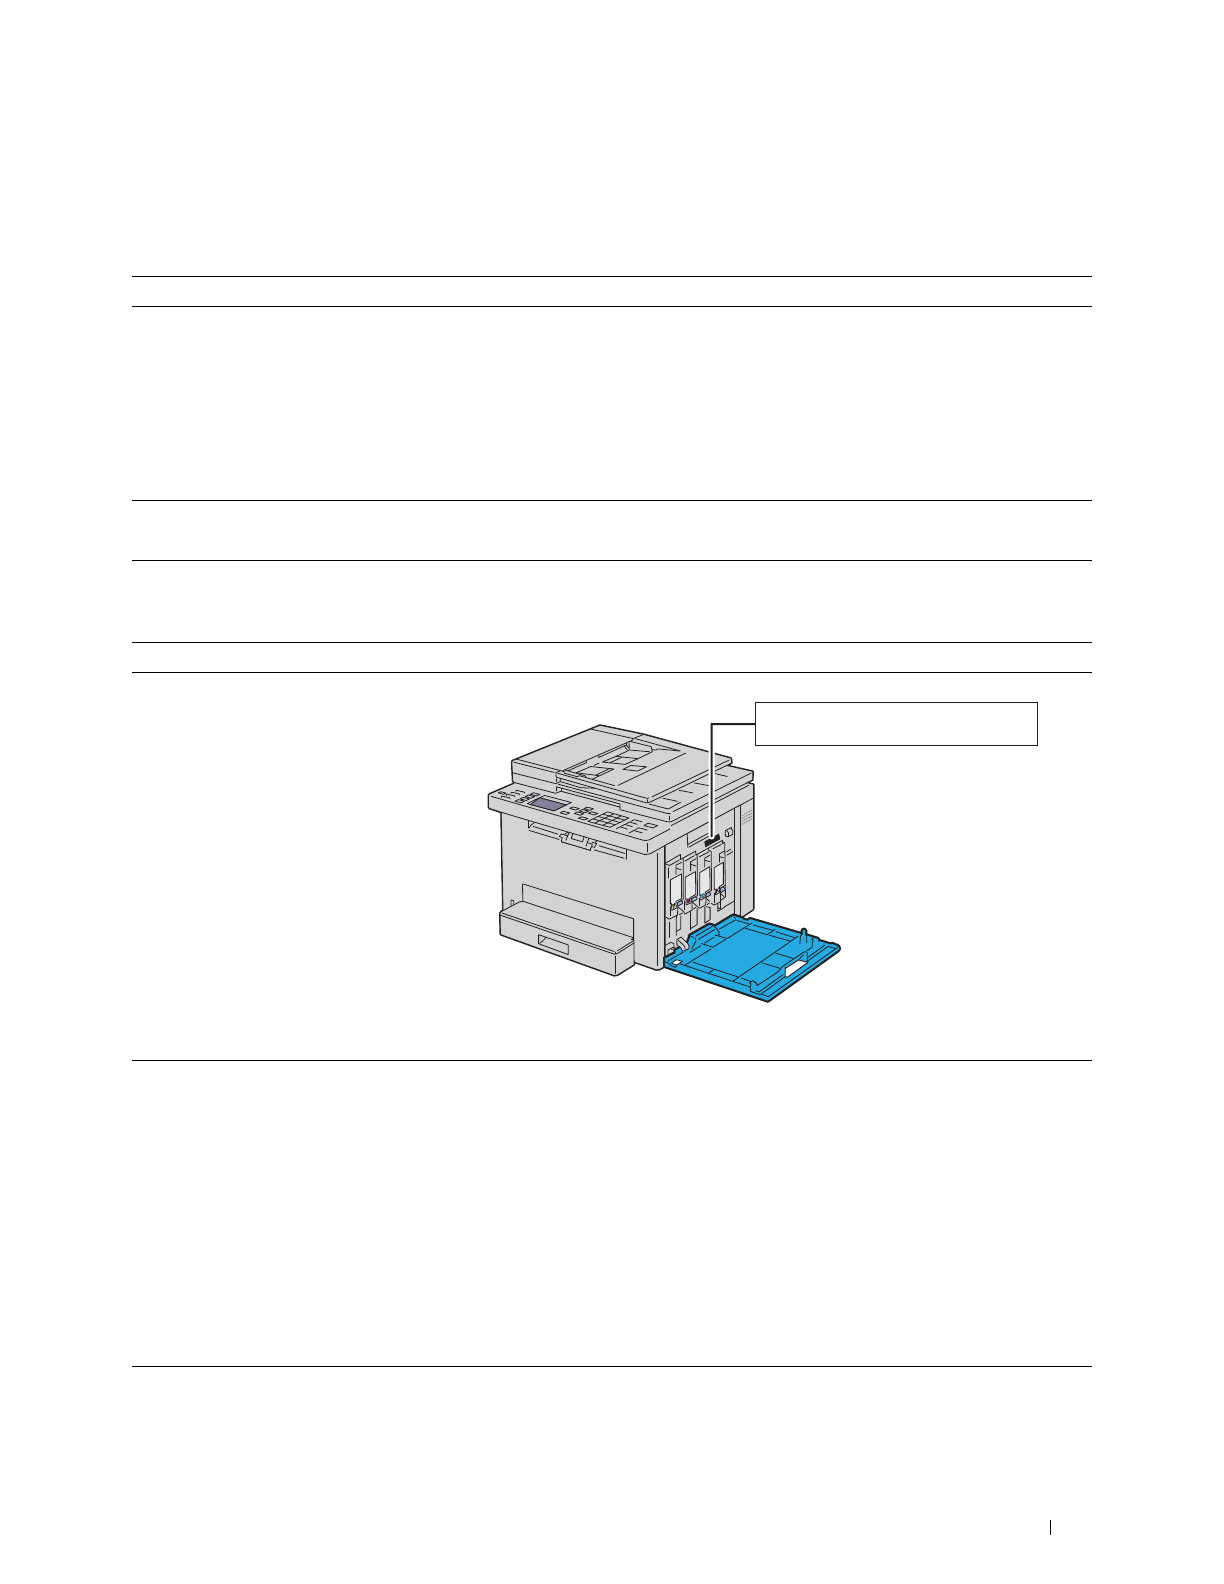 Dell E525w Color Multifunction Printer User's Guide User Manual To The